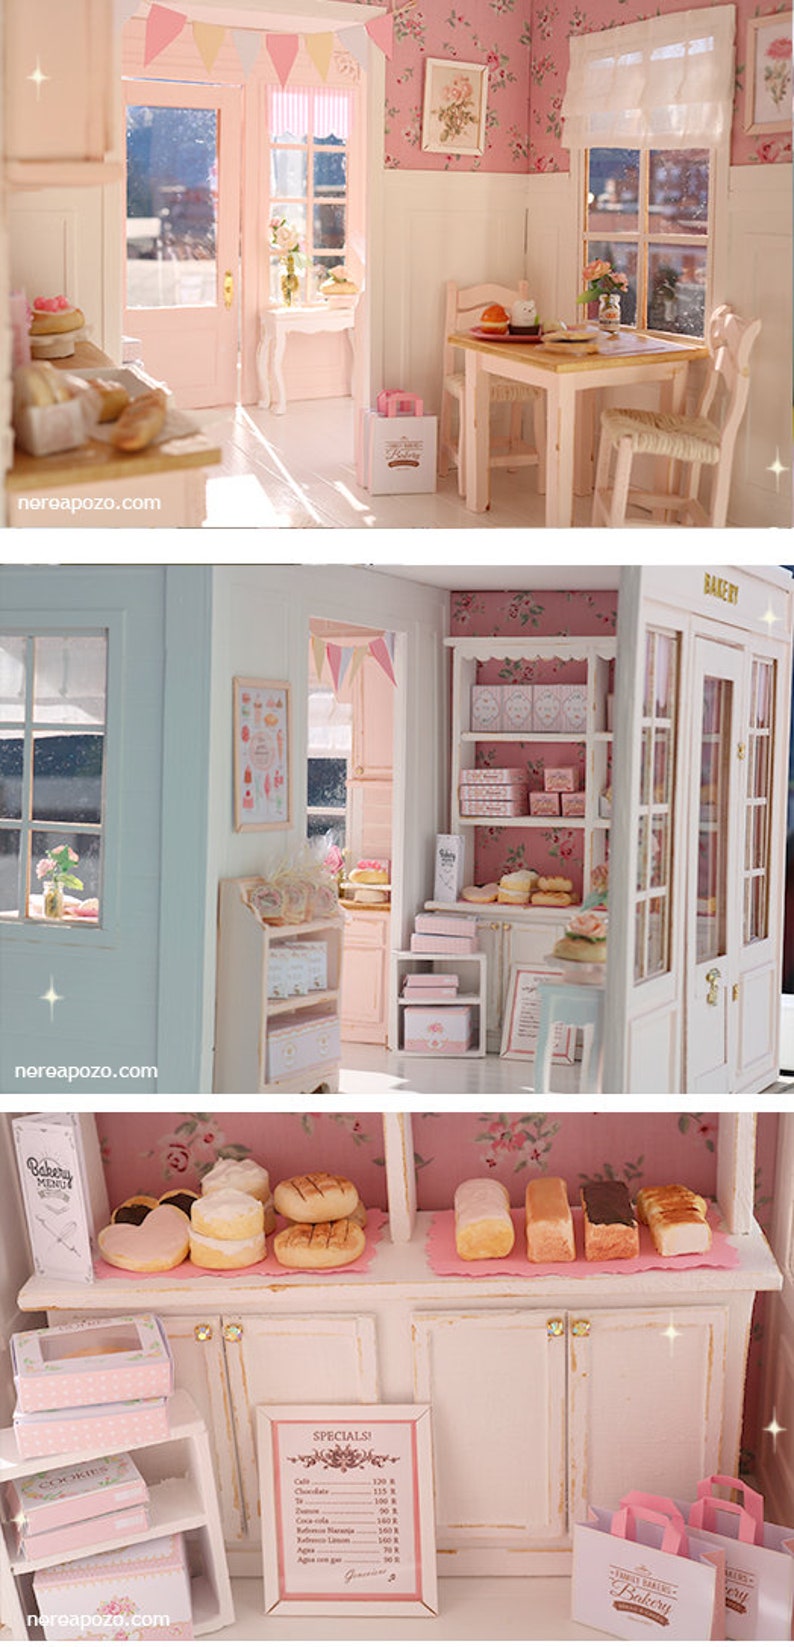 Roses Bakery cottage 1/10 miniature dollhouse diorama handmade image 4